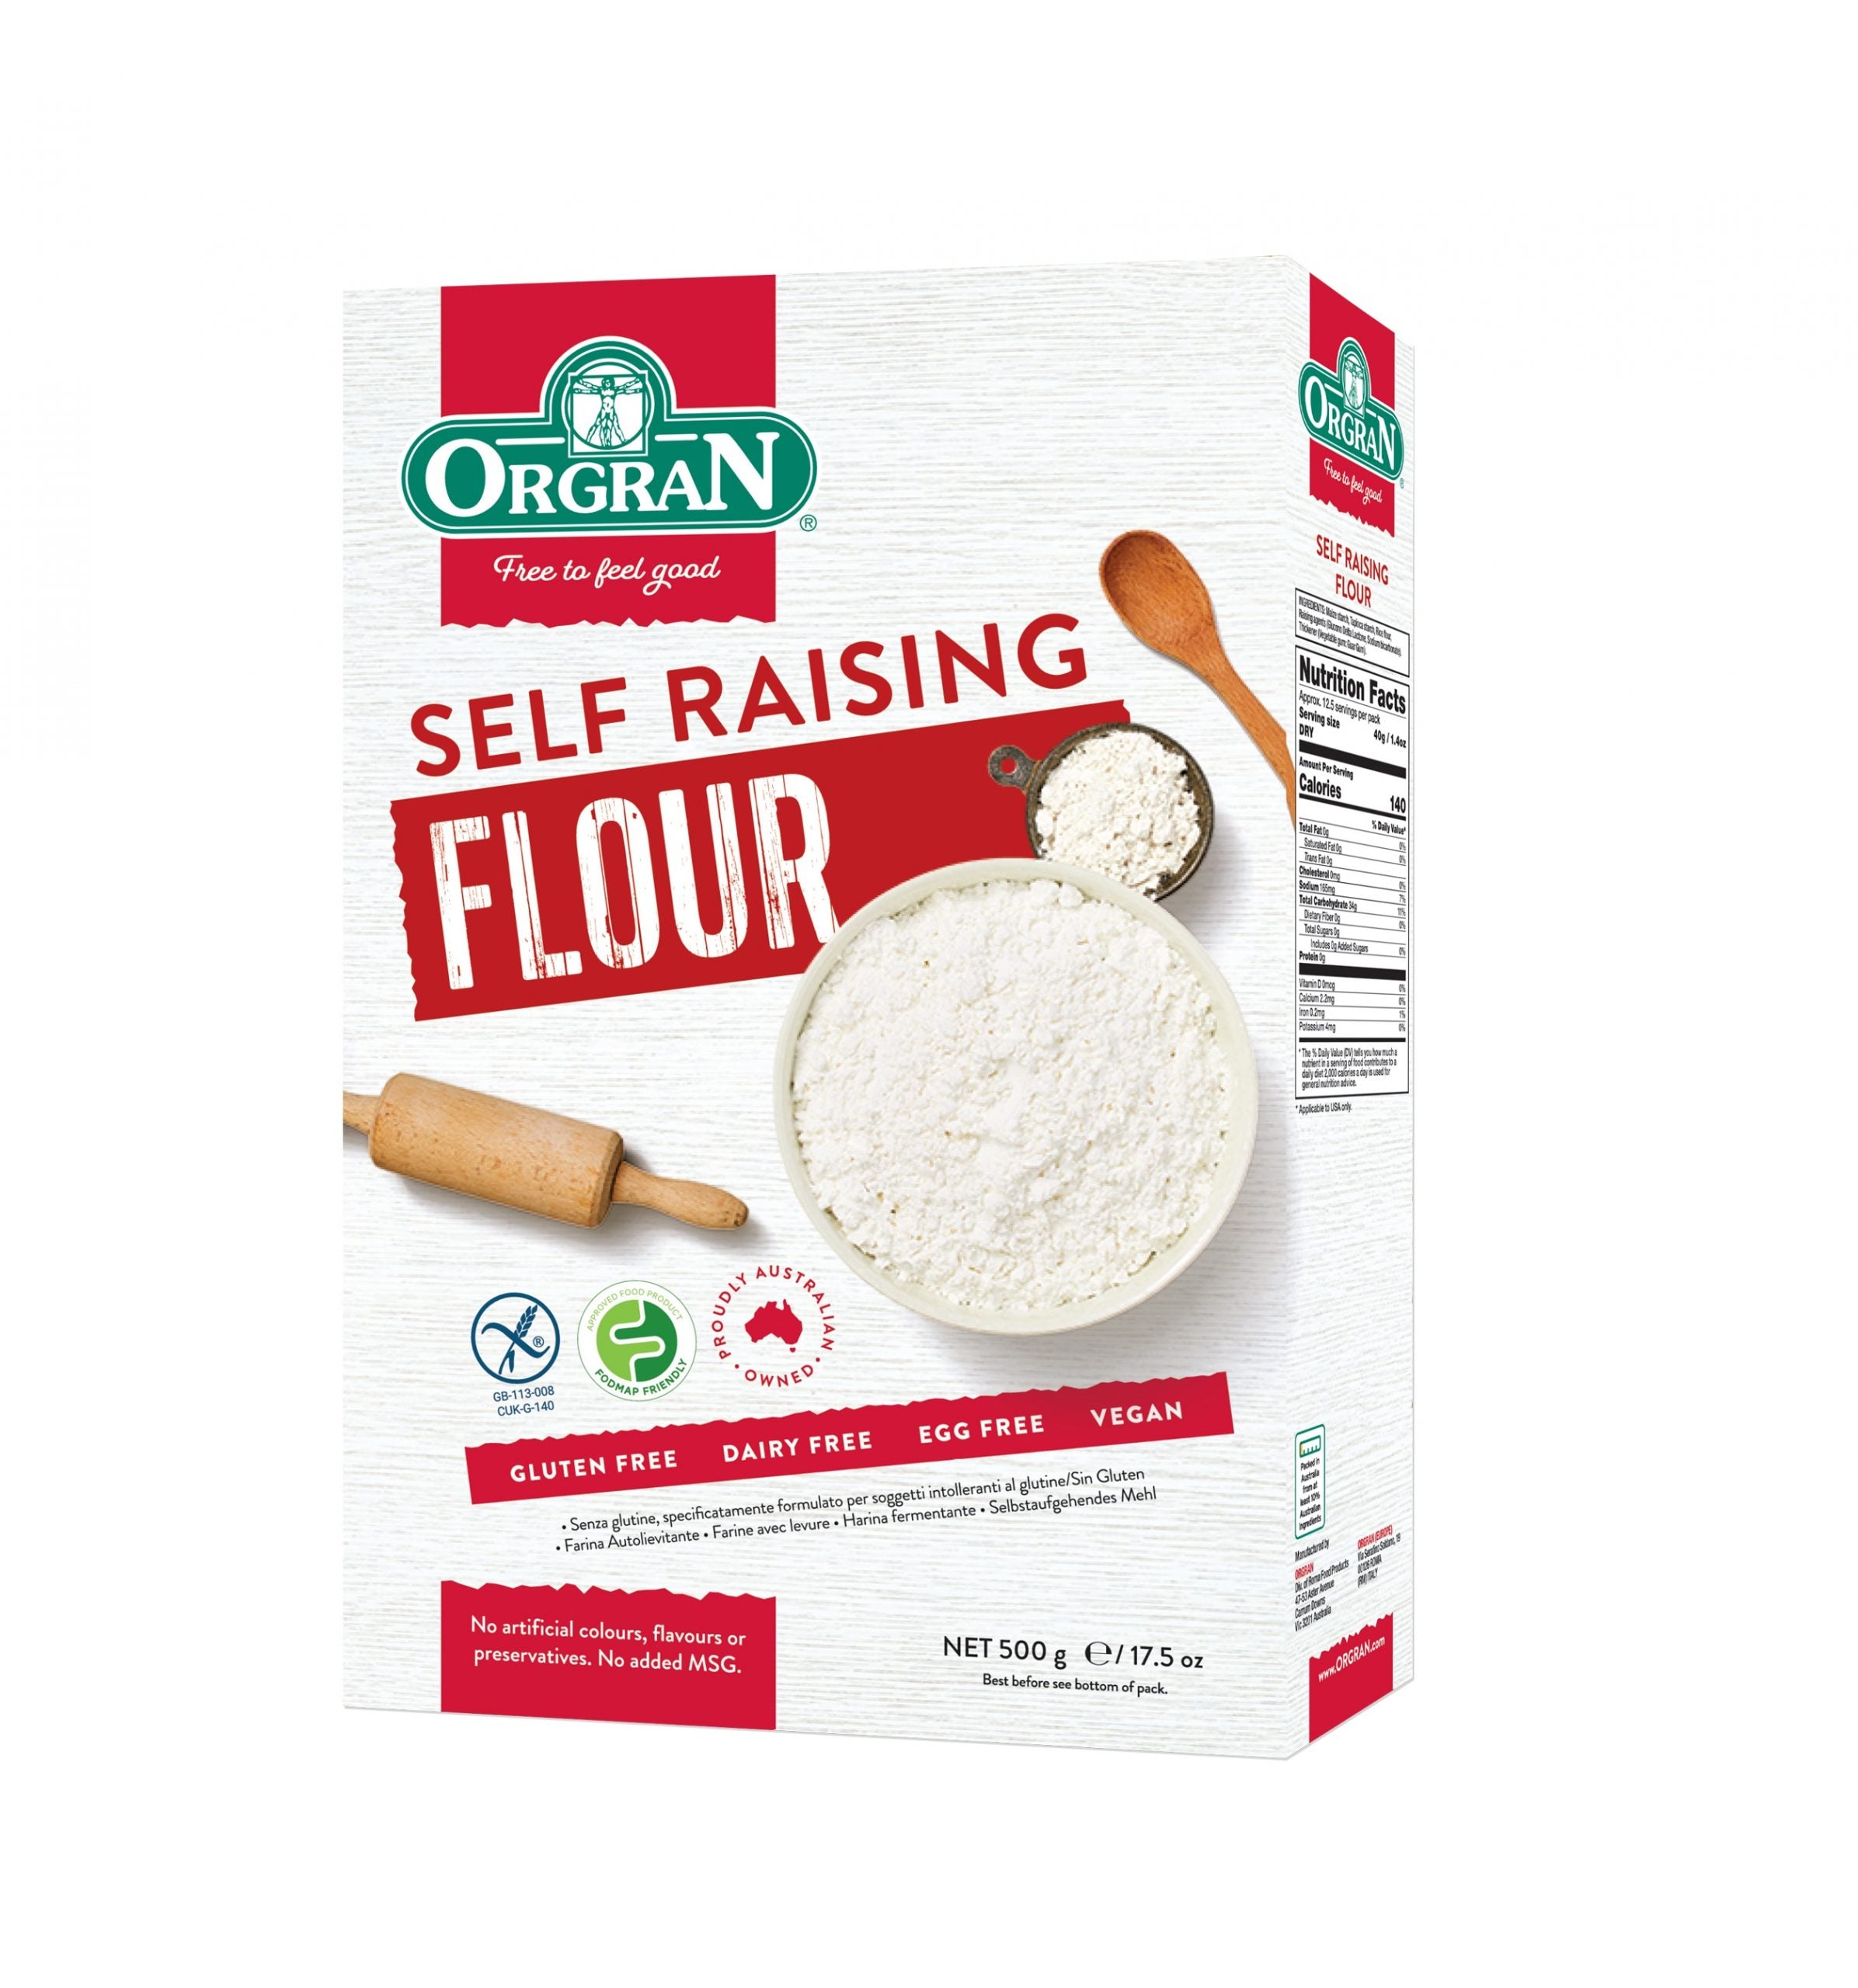 ORGRAN Self Raising Flour, 500g, Vegan, Gluten Free, Non GMO, Nut Free